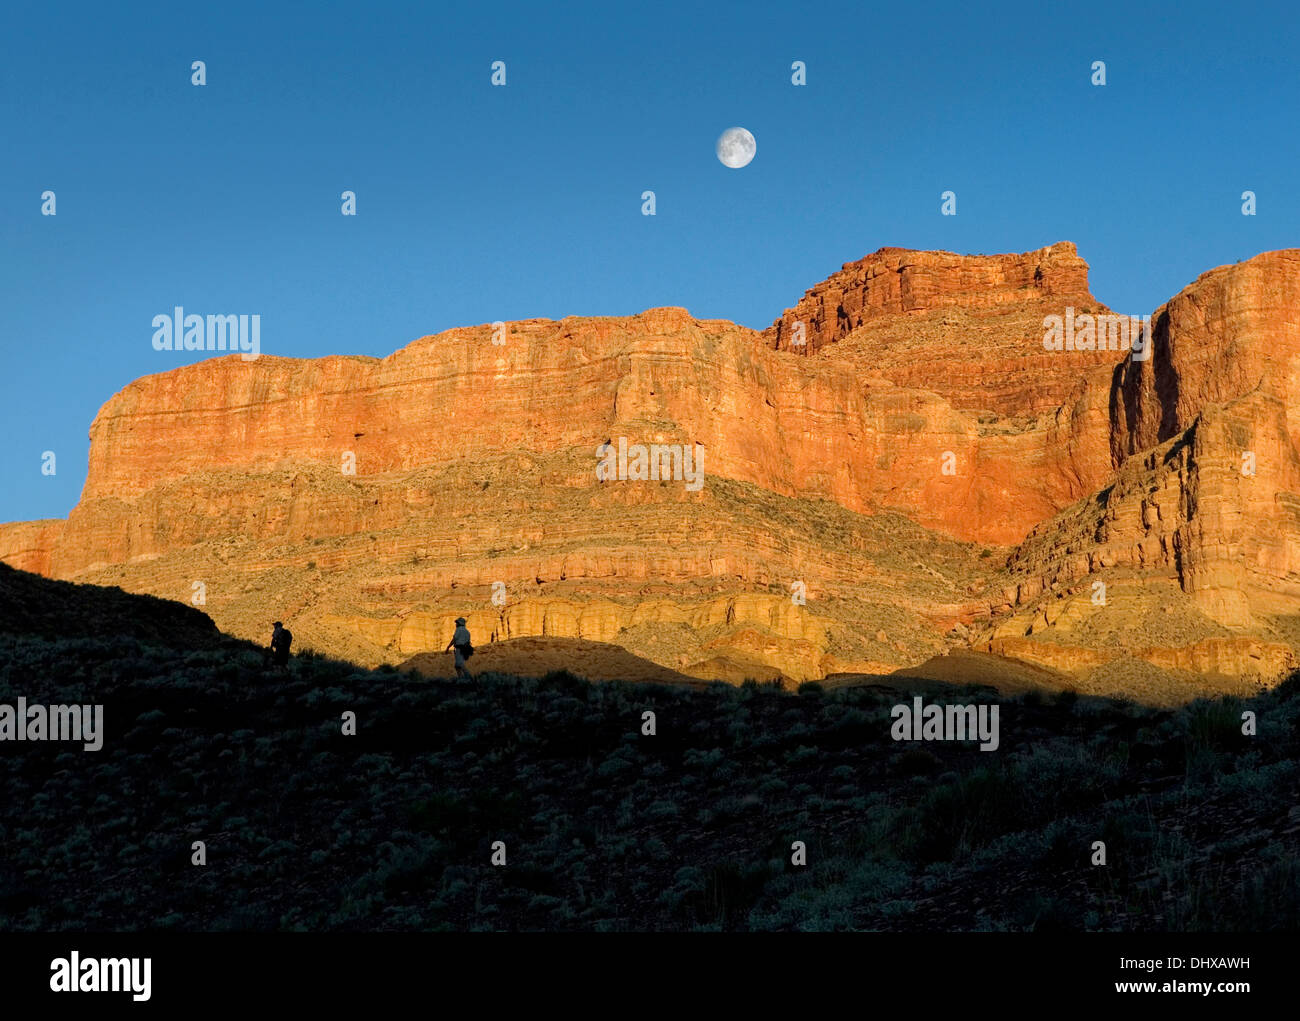 Hiking up a trail at sunrise under a setting full moon inside the Grand Canyon, Arizona, USA Stock Photo